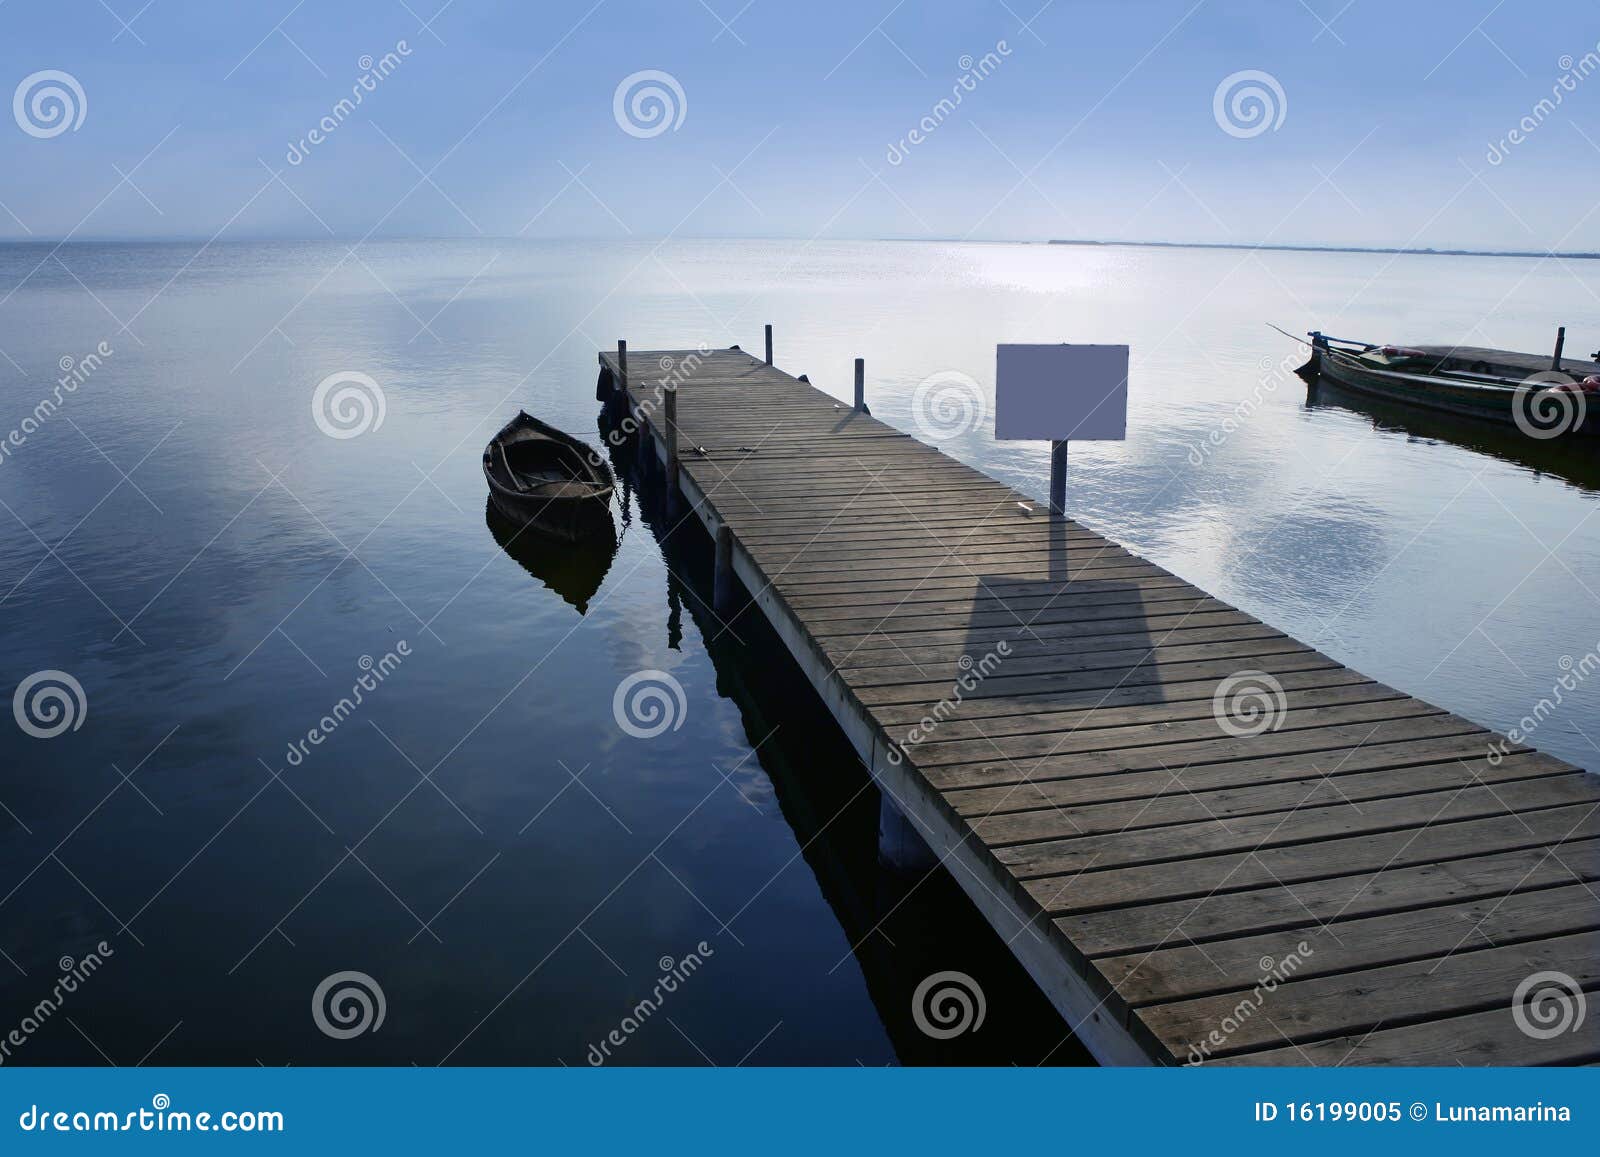 albufera lake wetlands pier in valencia spain